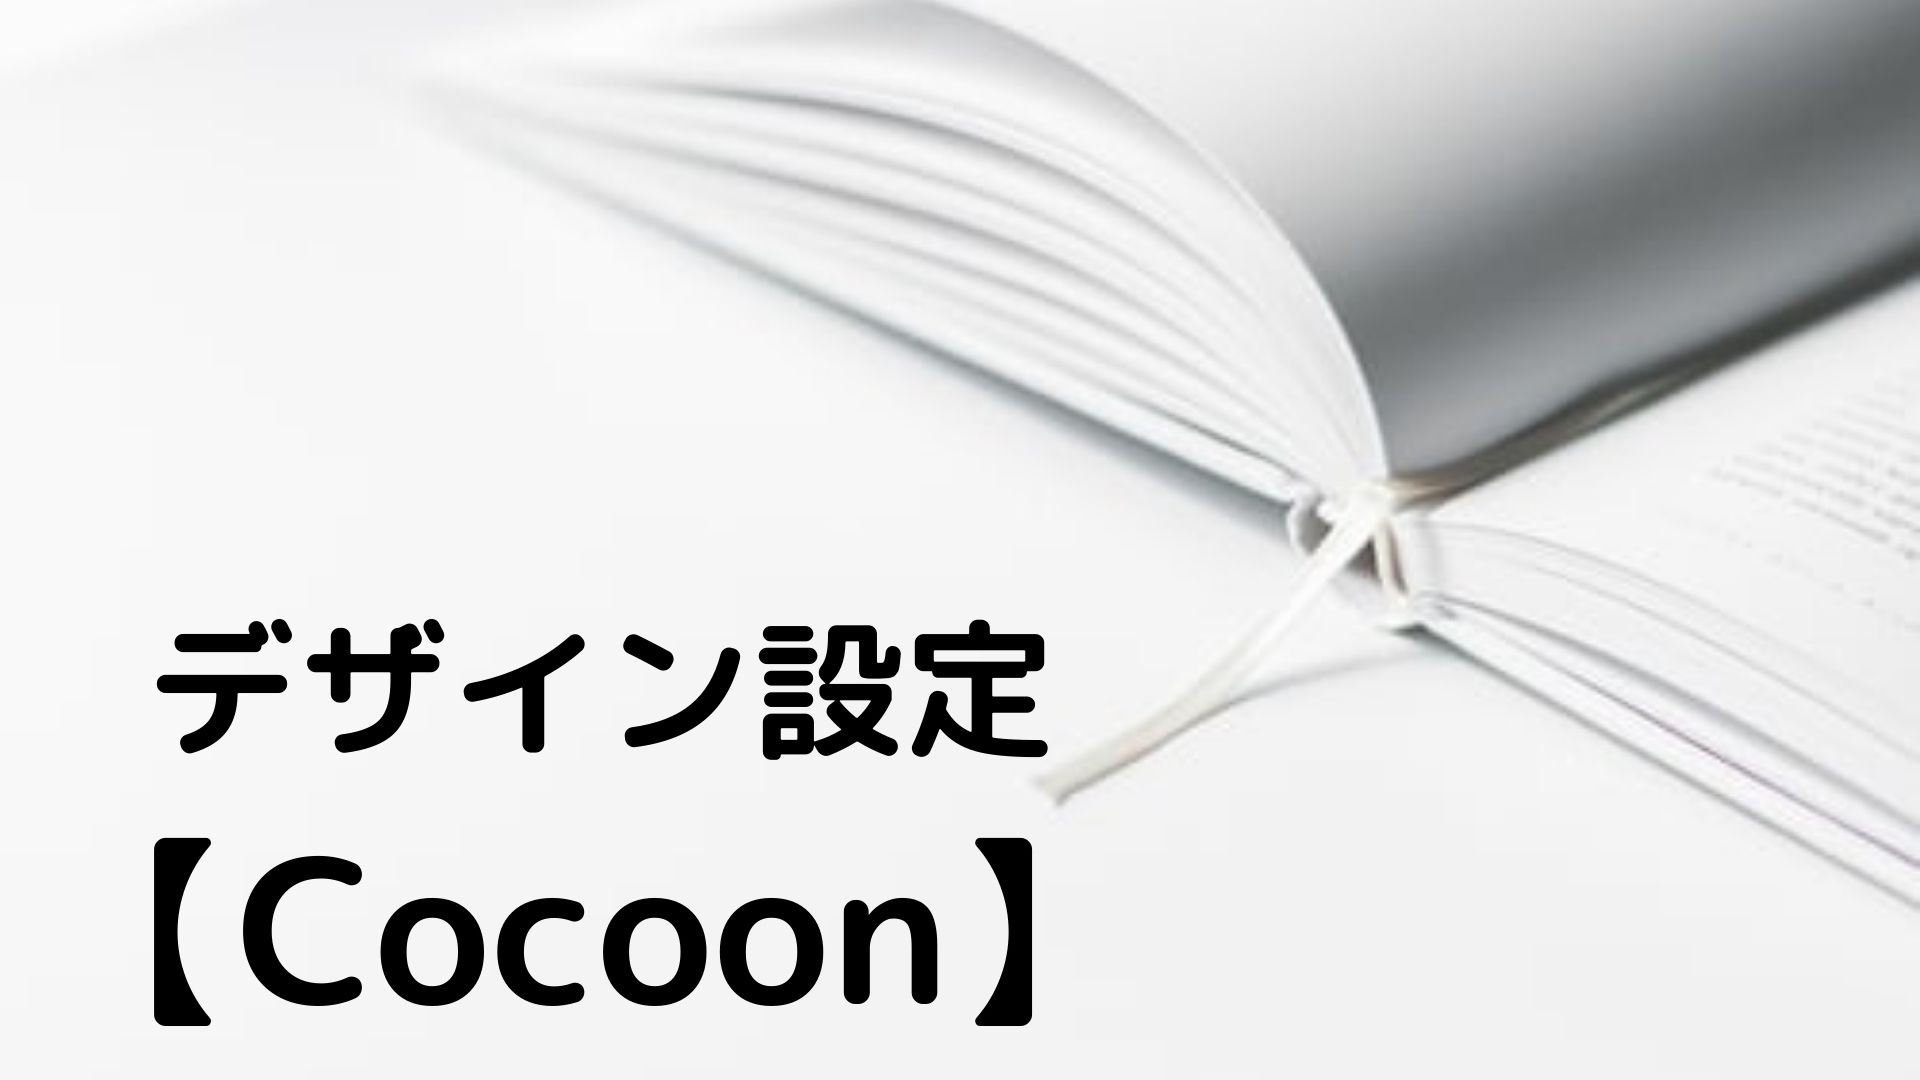 【Cocoon】 デザイン設定